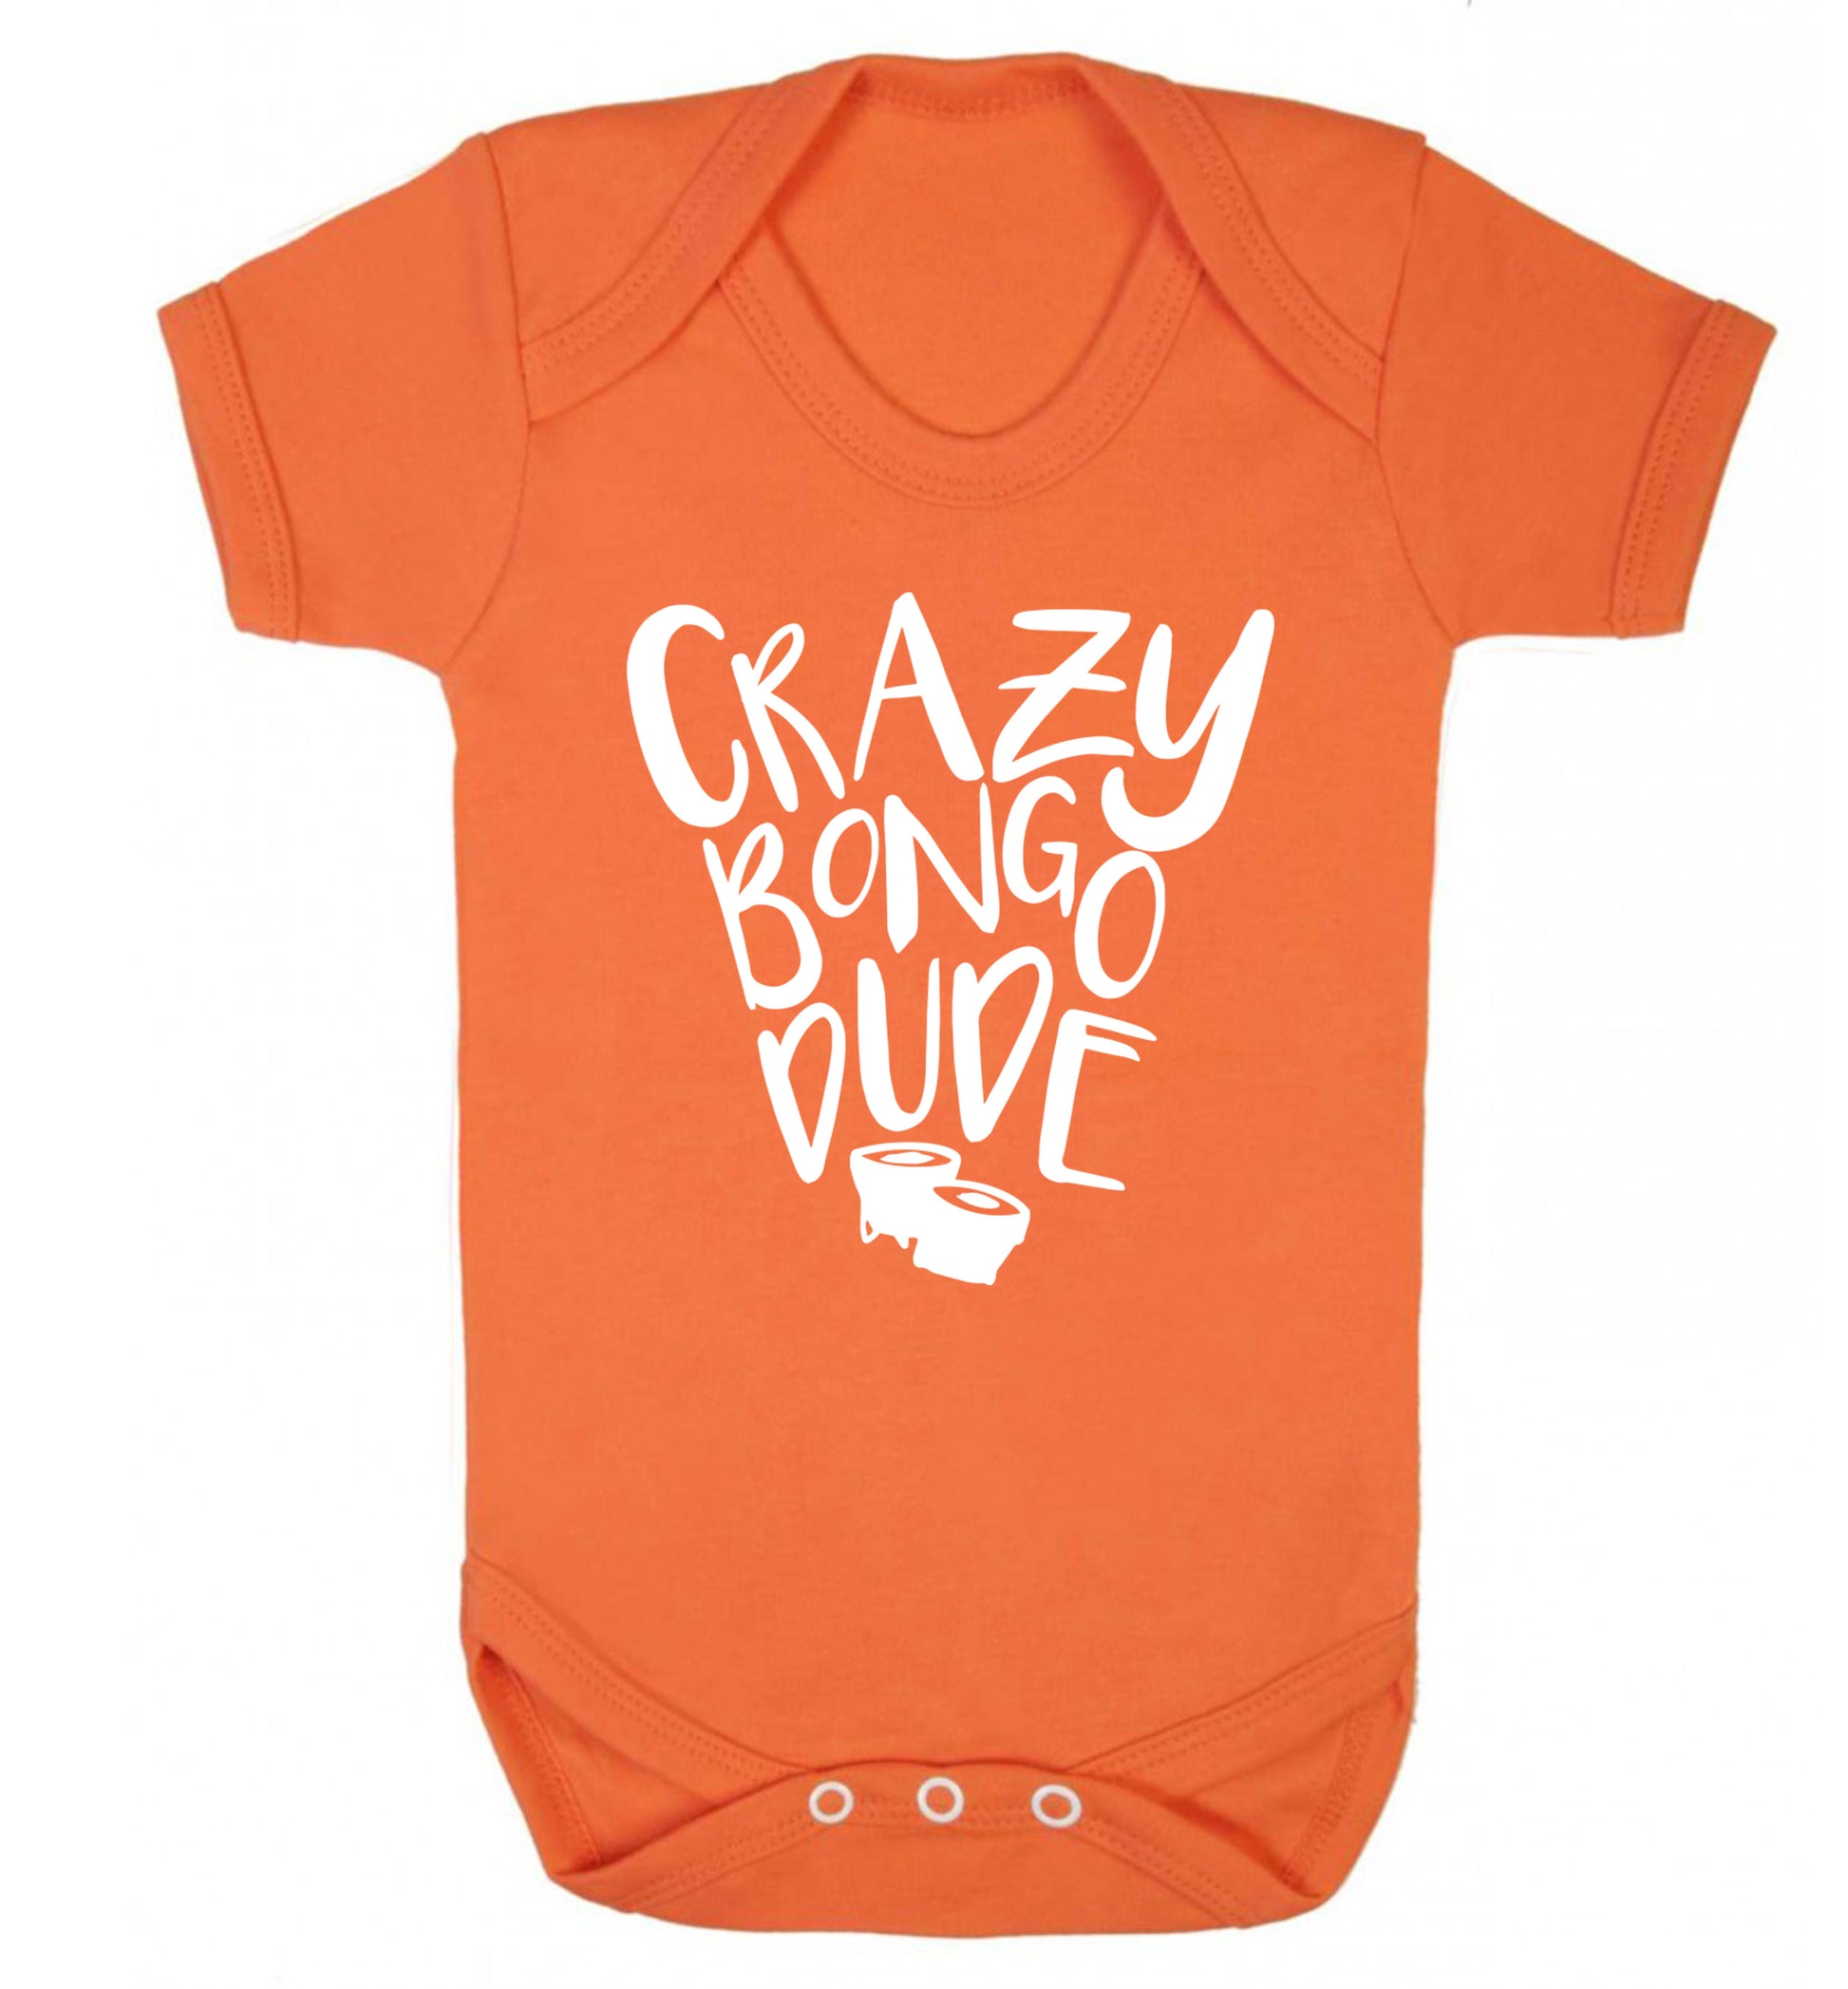 Crazy bongo dude Baby Vest orange 18-24 months